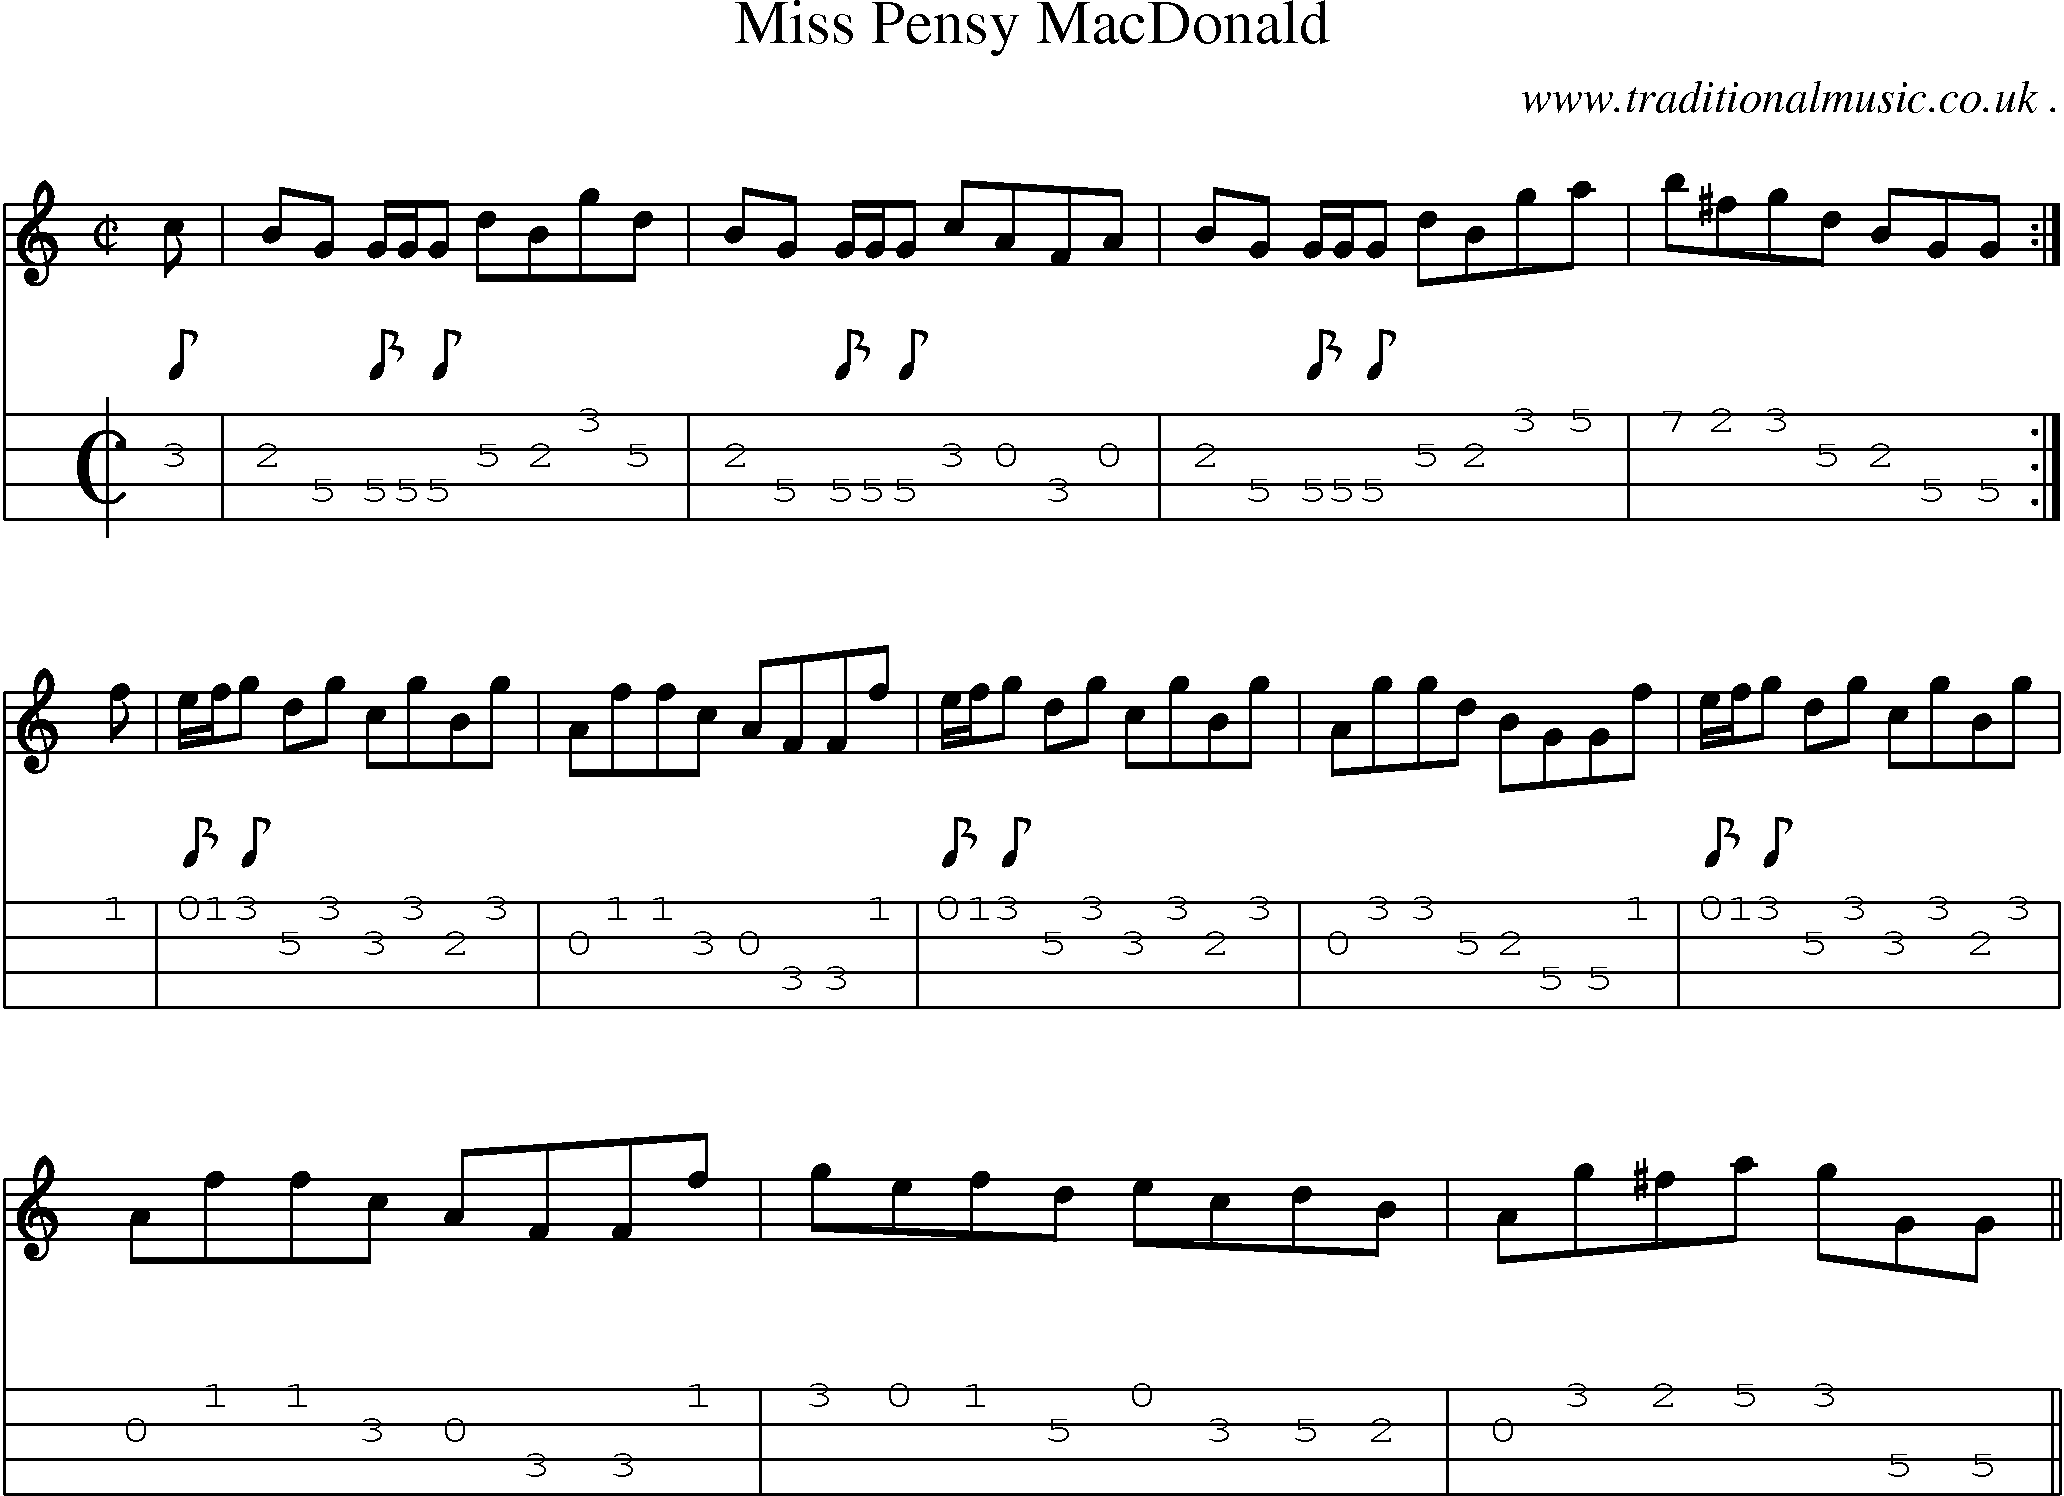 Sheet-music  score, Chords and Mandolin Tabs for Miss Pensy Macdonald